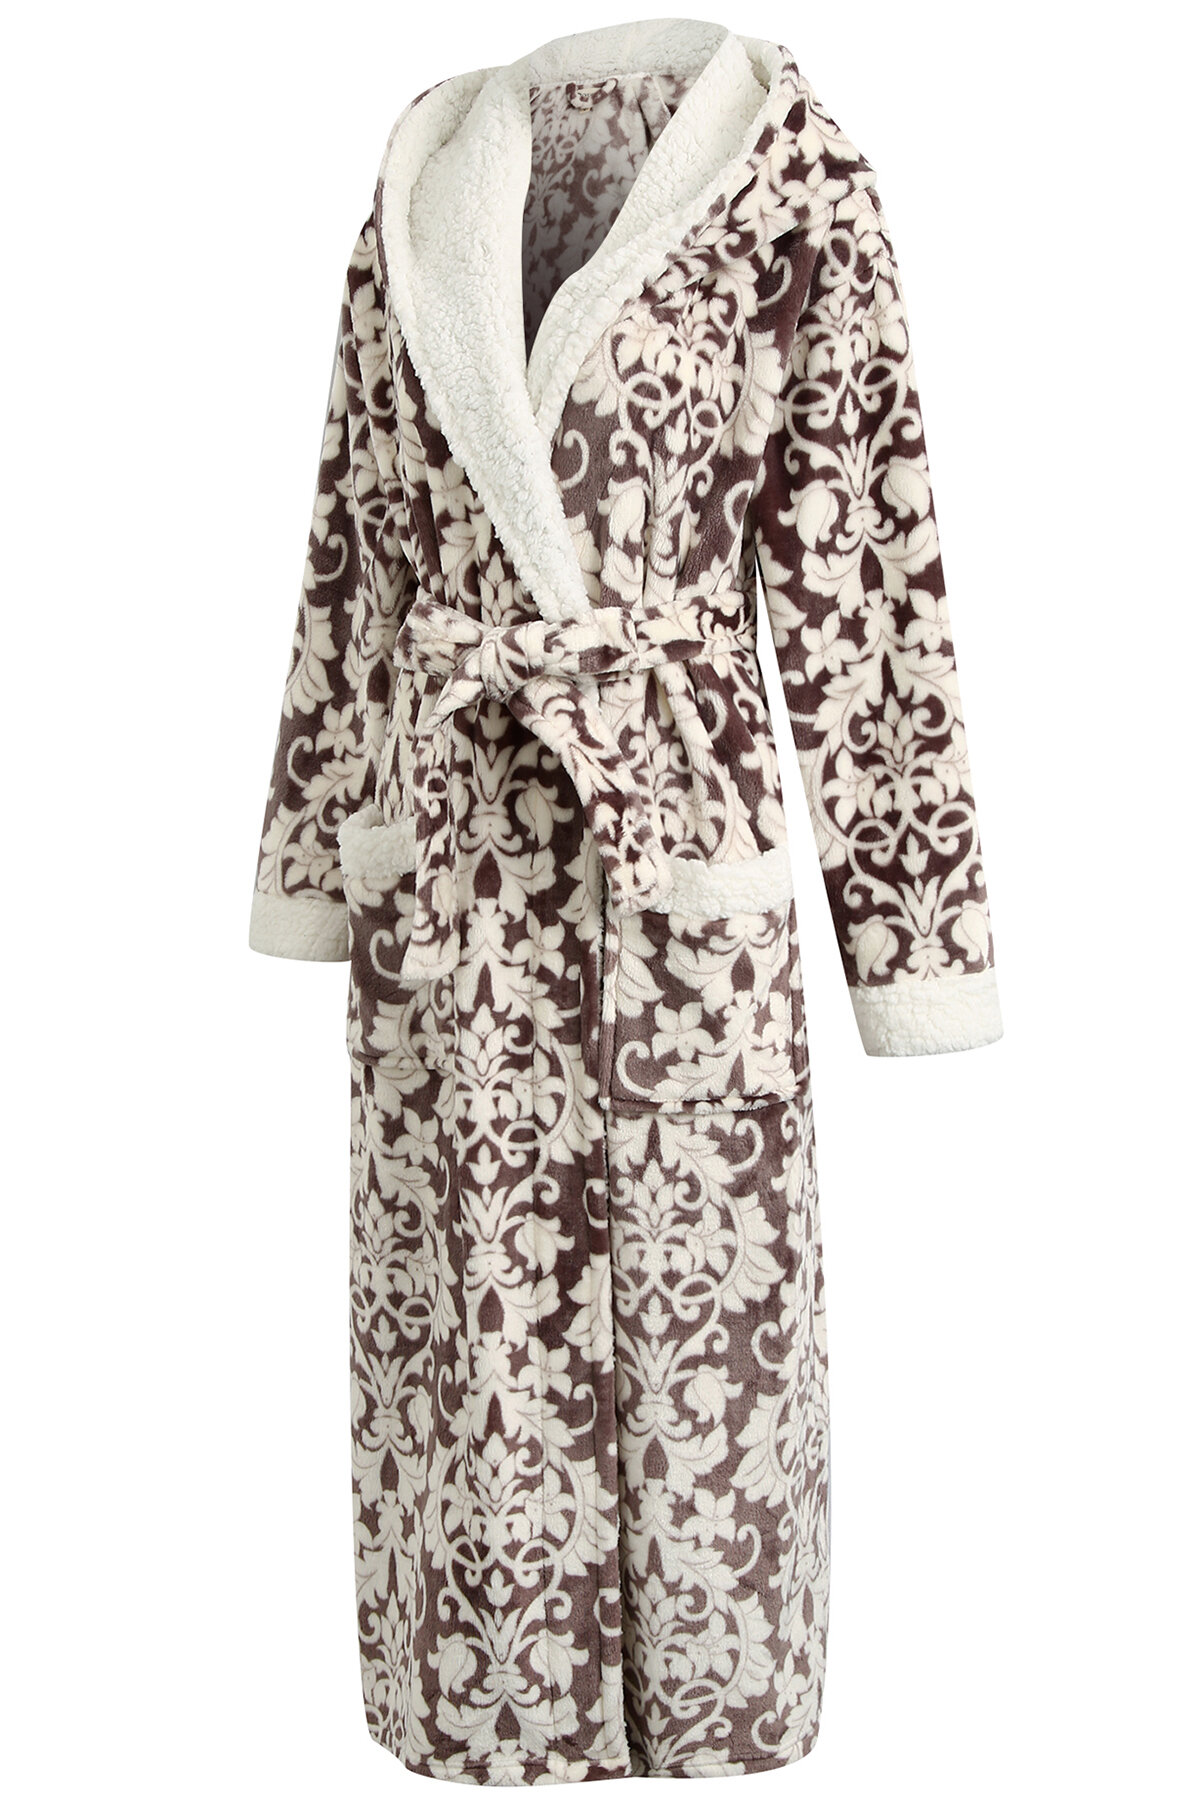 NY Threads Women's Fleece Bathrobe Review - Morning Gown